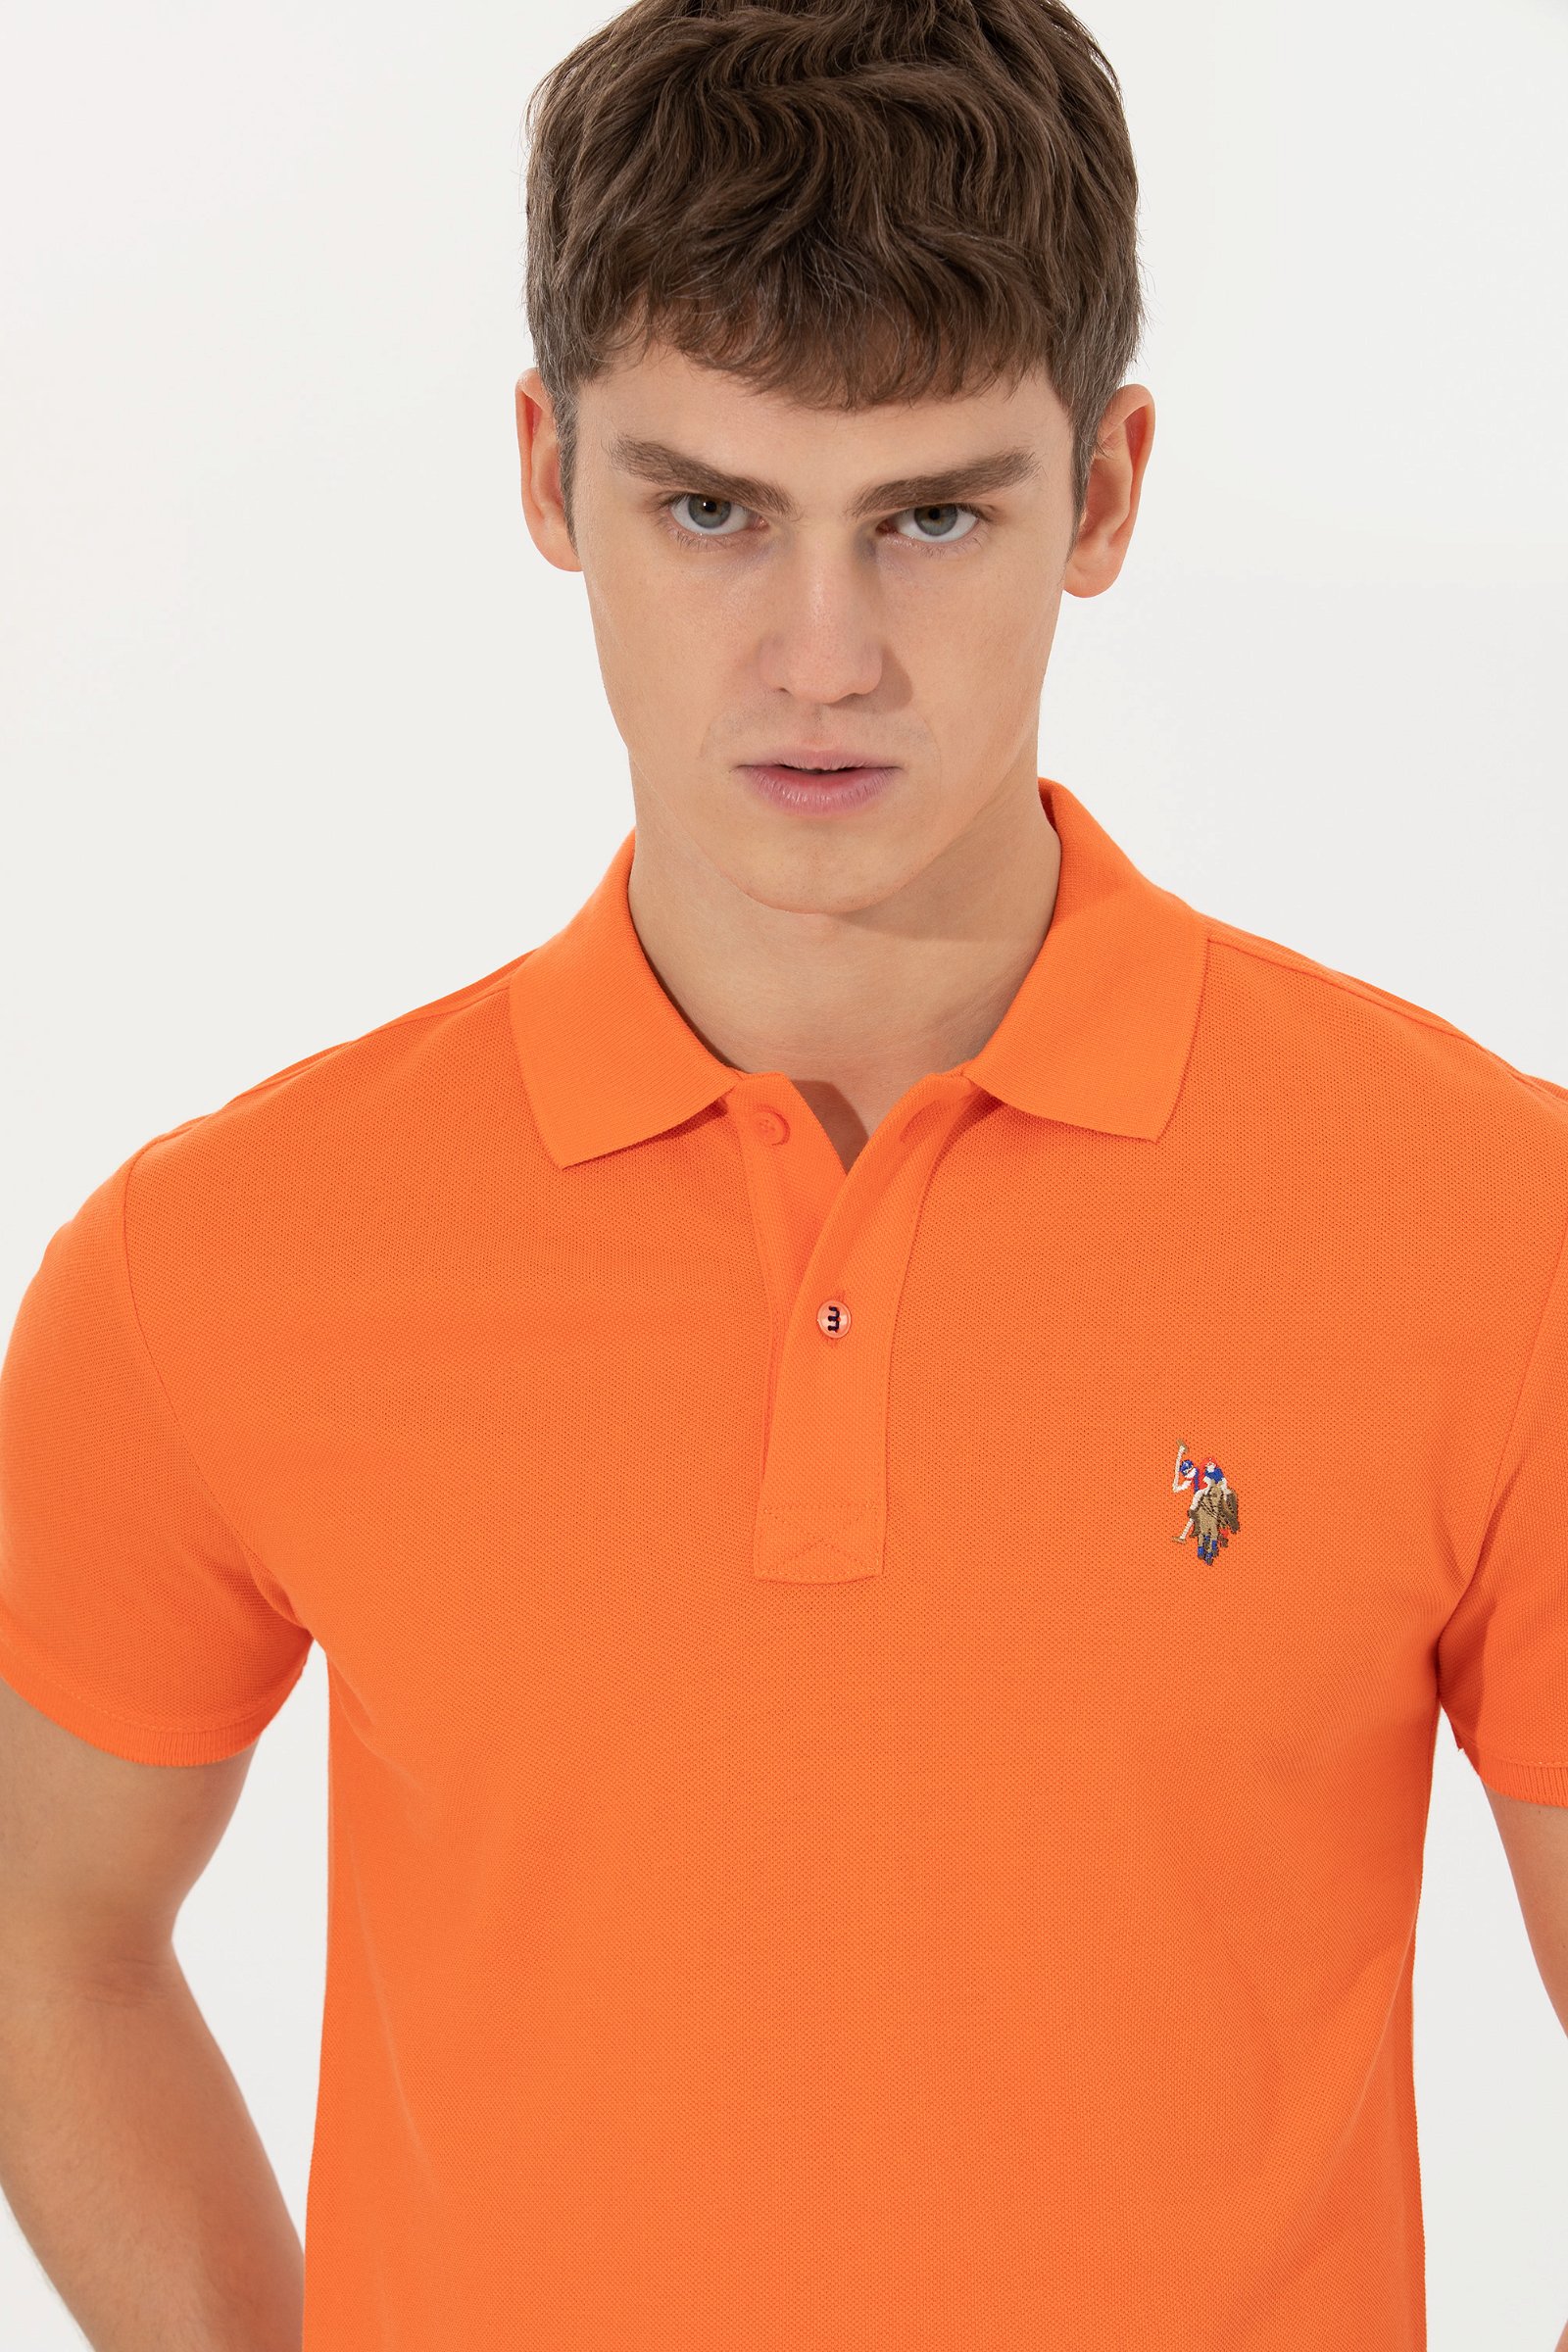 تی شرت یقه پولو نارنجی  اندامی آستین کوتاه مردانه یو اس پولو